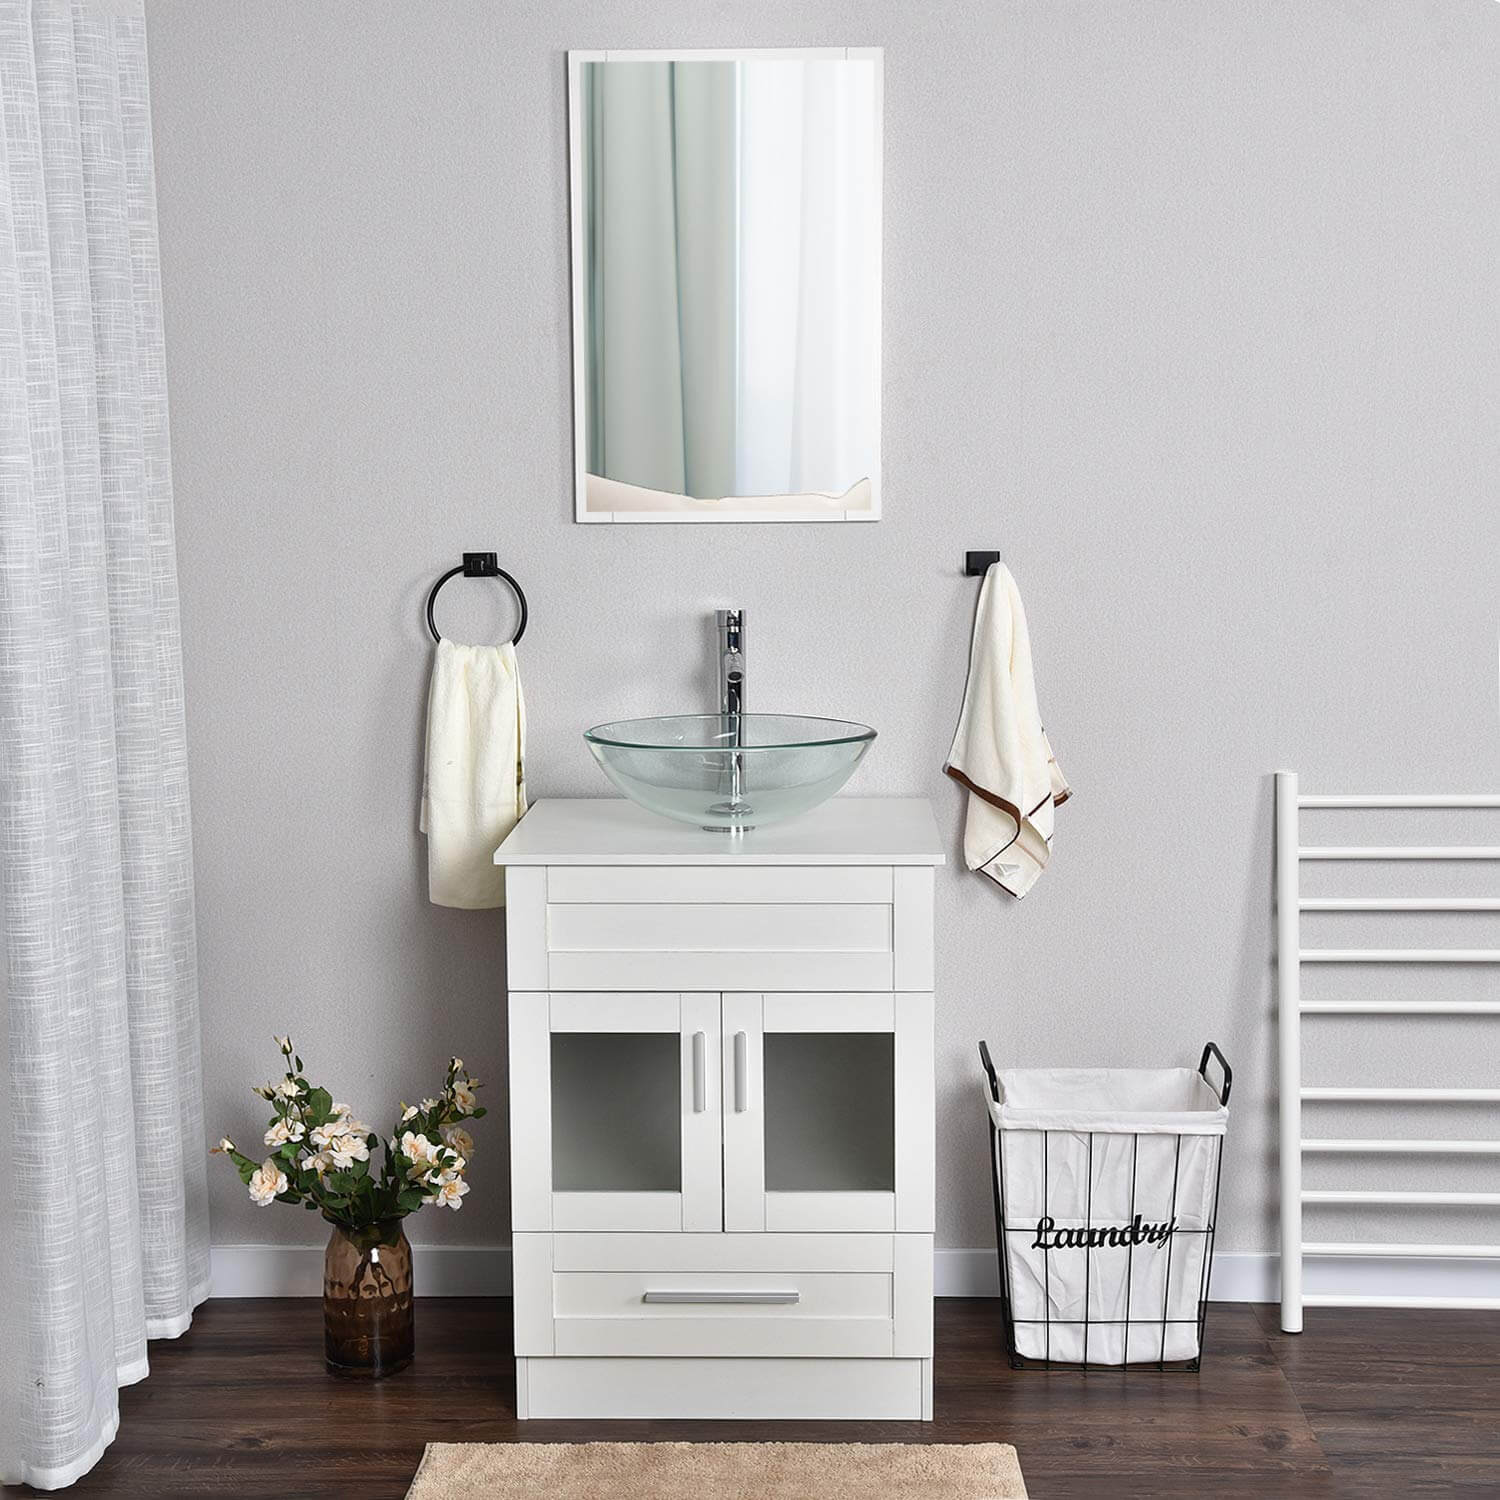 Elecwish White Bathroom Vanity with Glossy Glass Sink Set BA1001-WH display scene